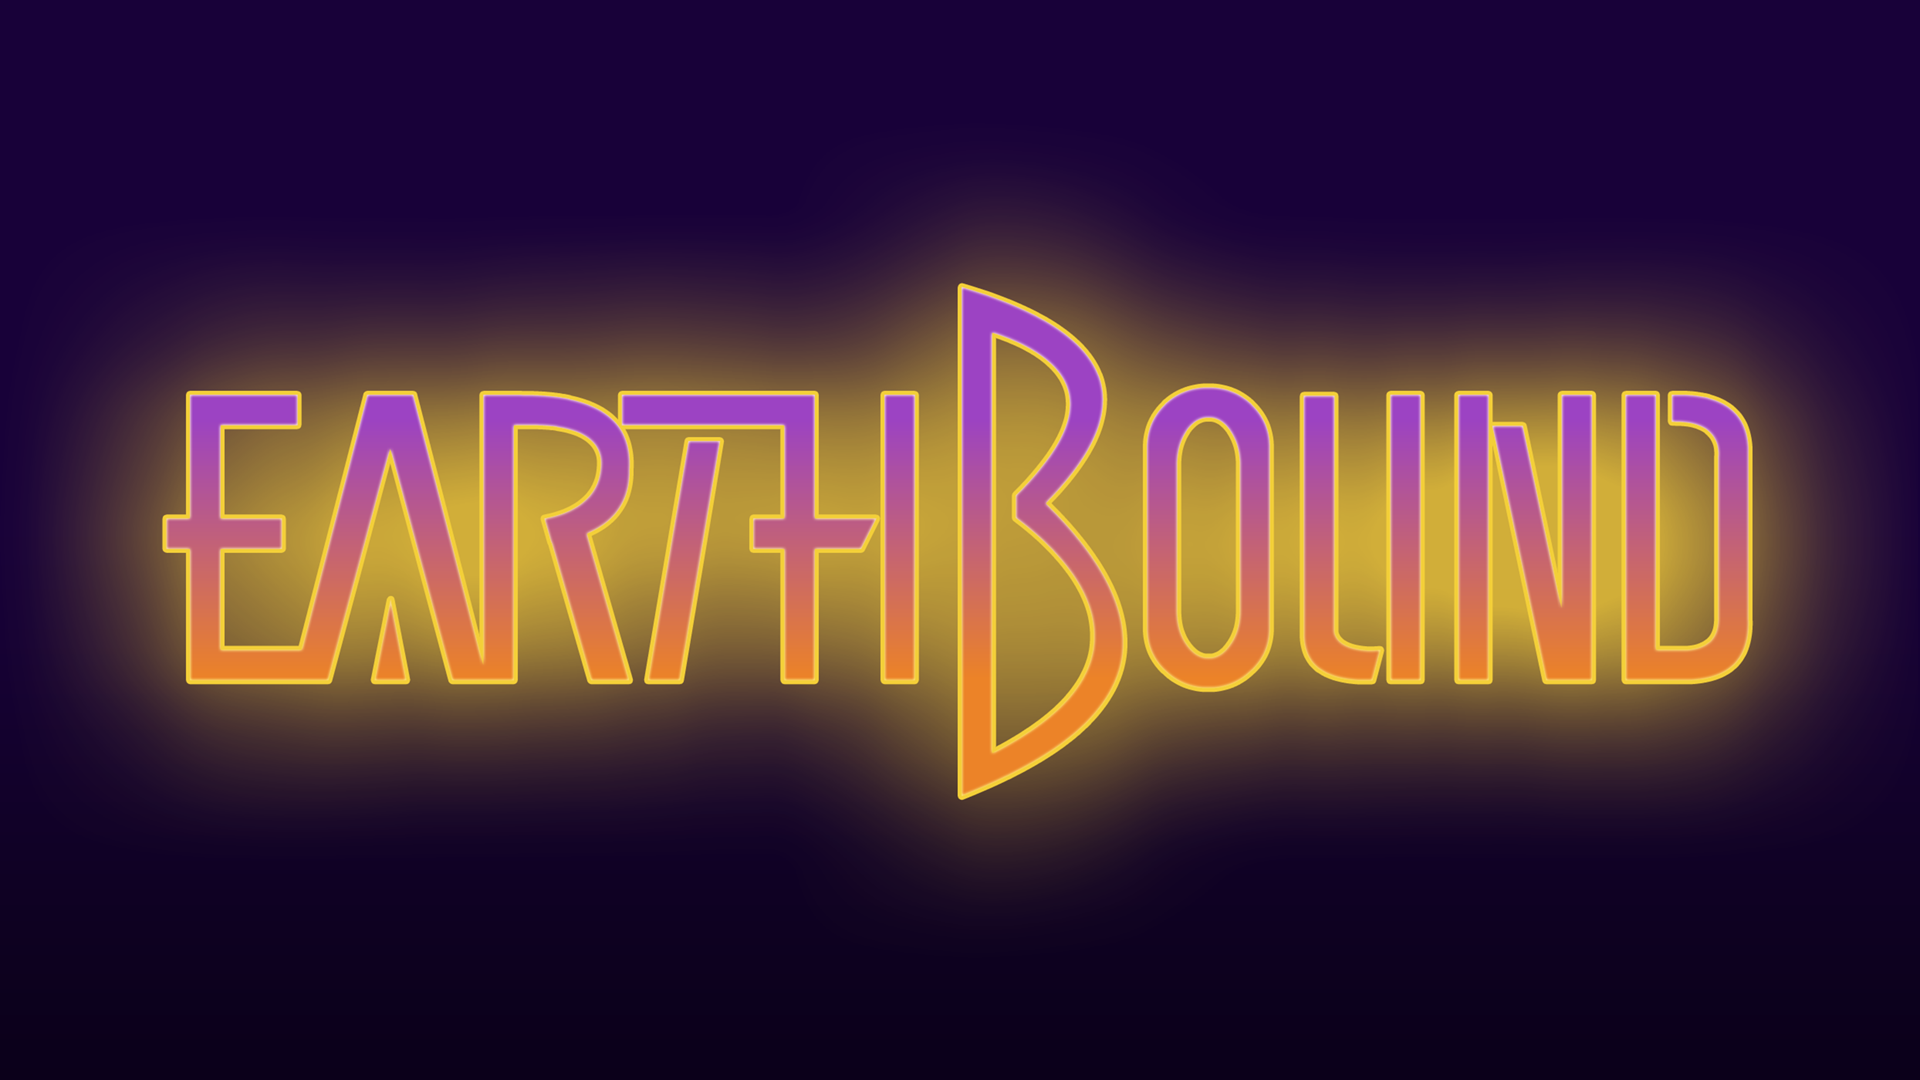 Earthbound Logo Wallpaper 1920x1080 by hocotate civ 1920x1080